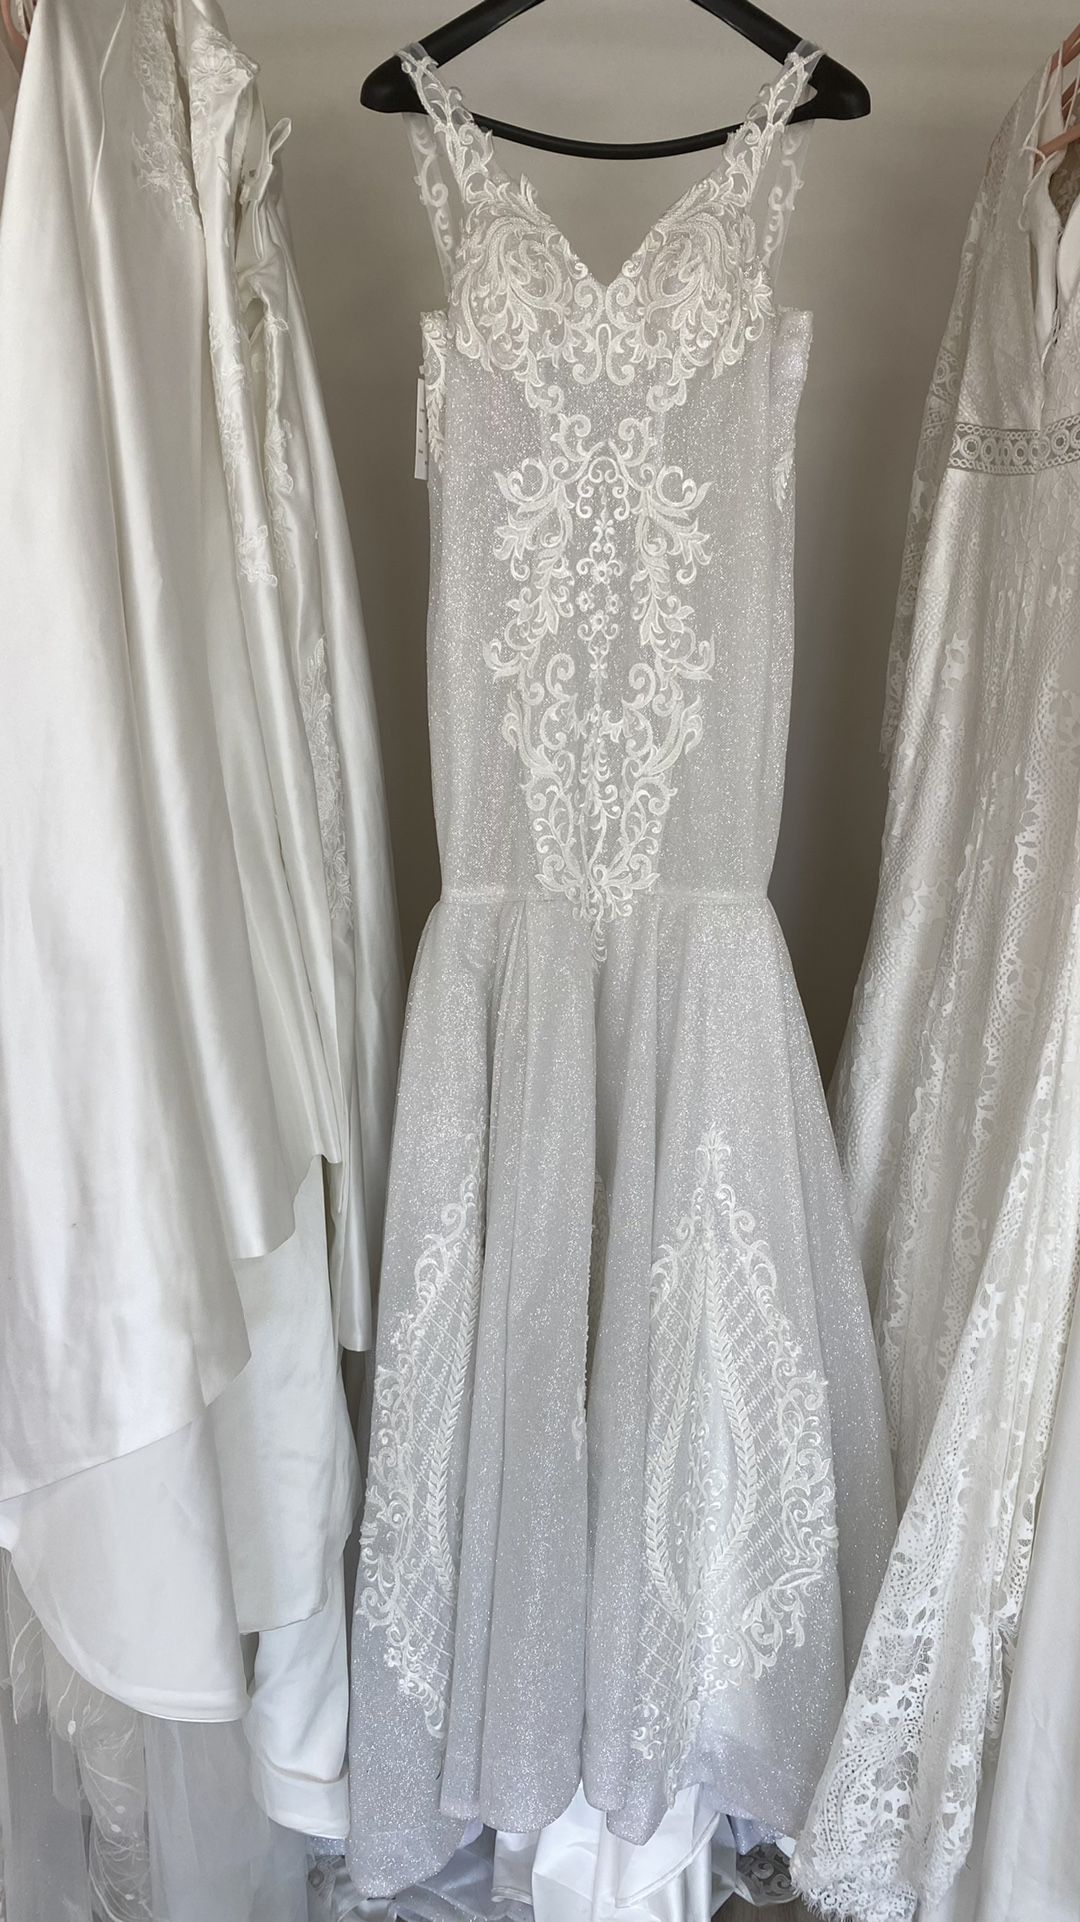 Glittering Mermaid Style Wedding Gown Size 6 -8